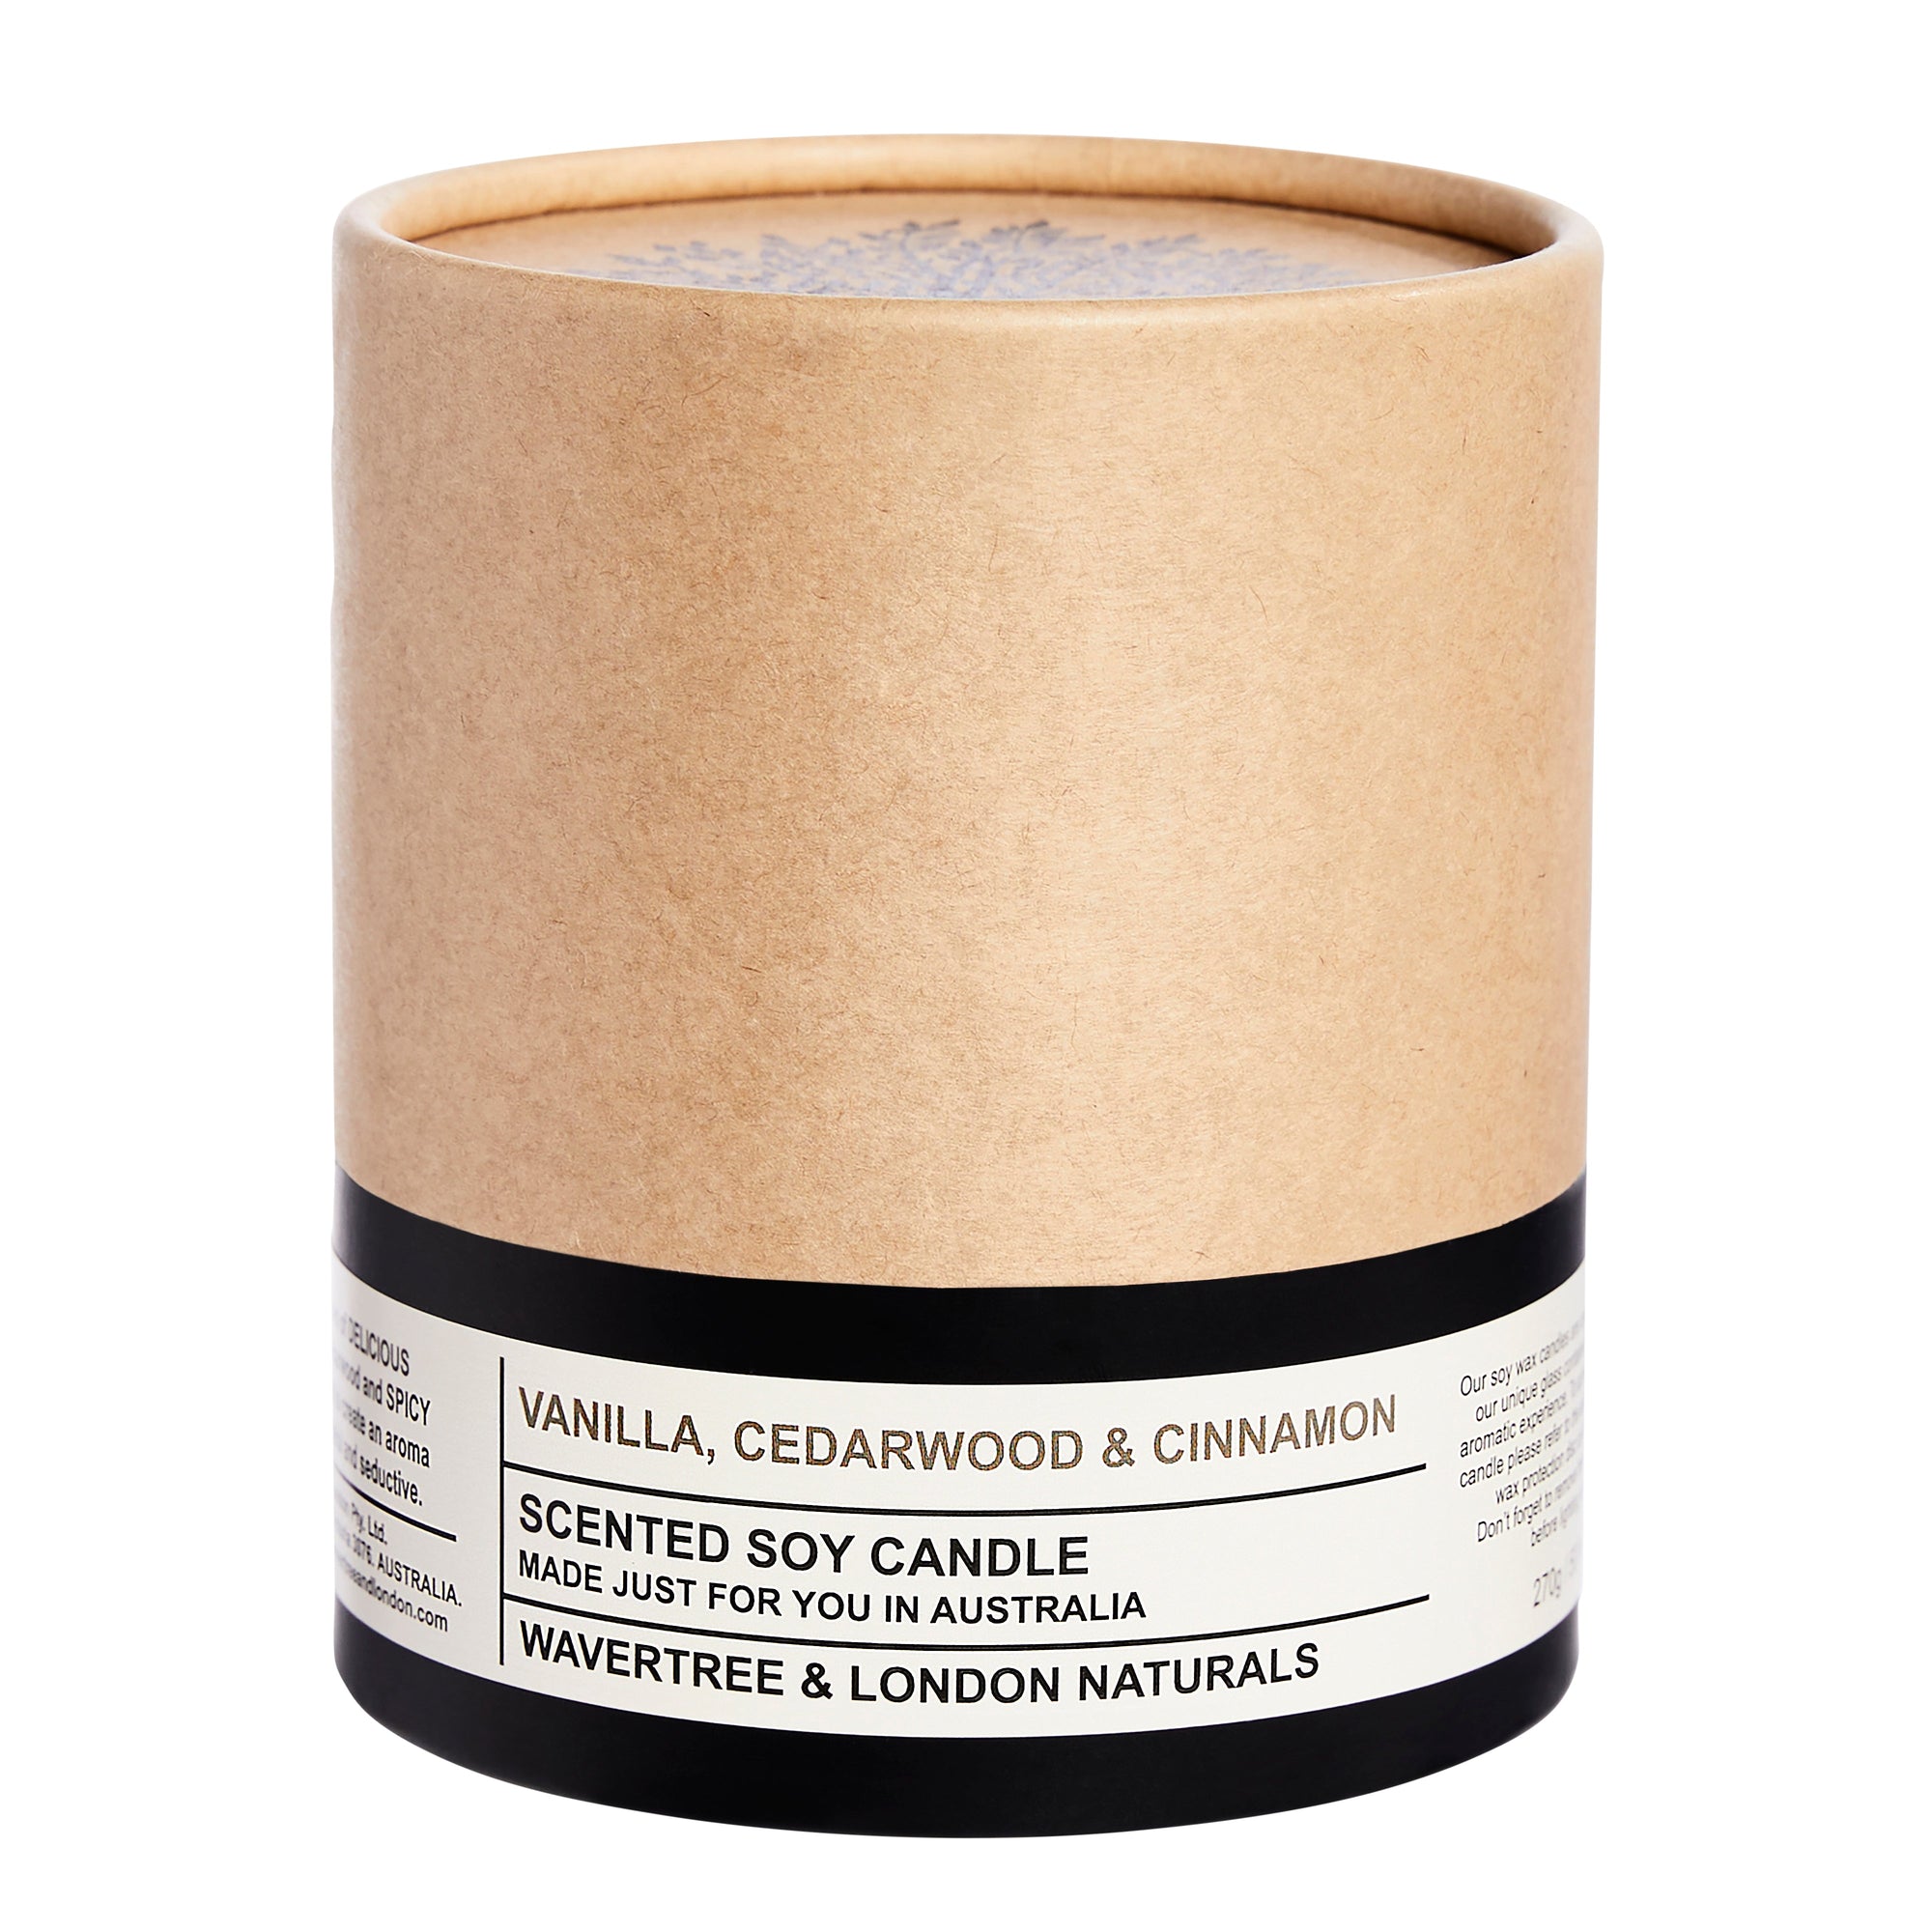 Vanilla, Cedarwood & Cinnamon 6 x Candle Carton